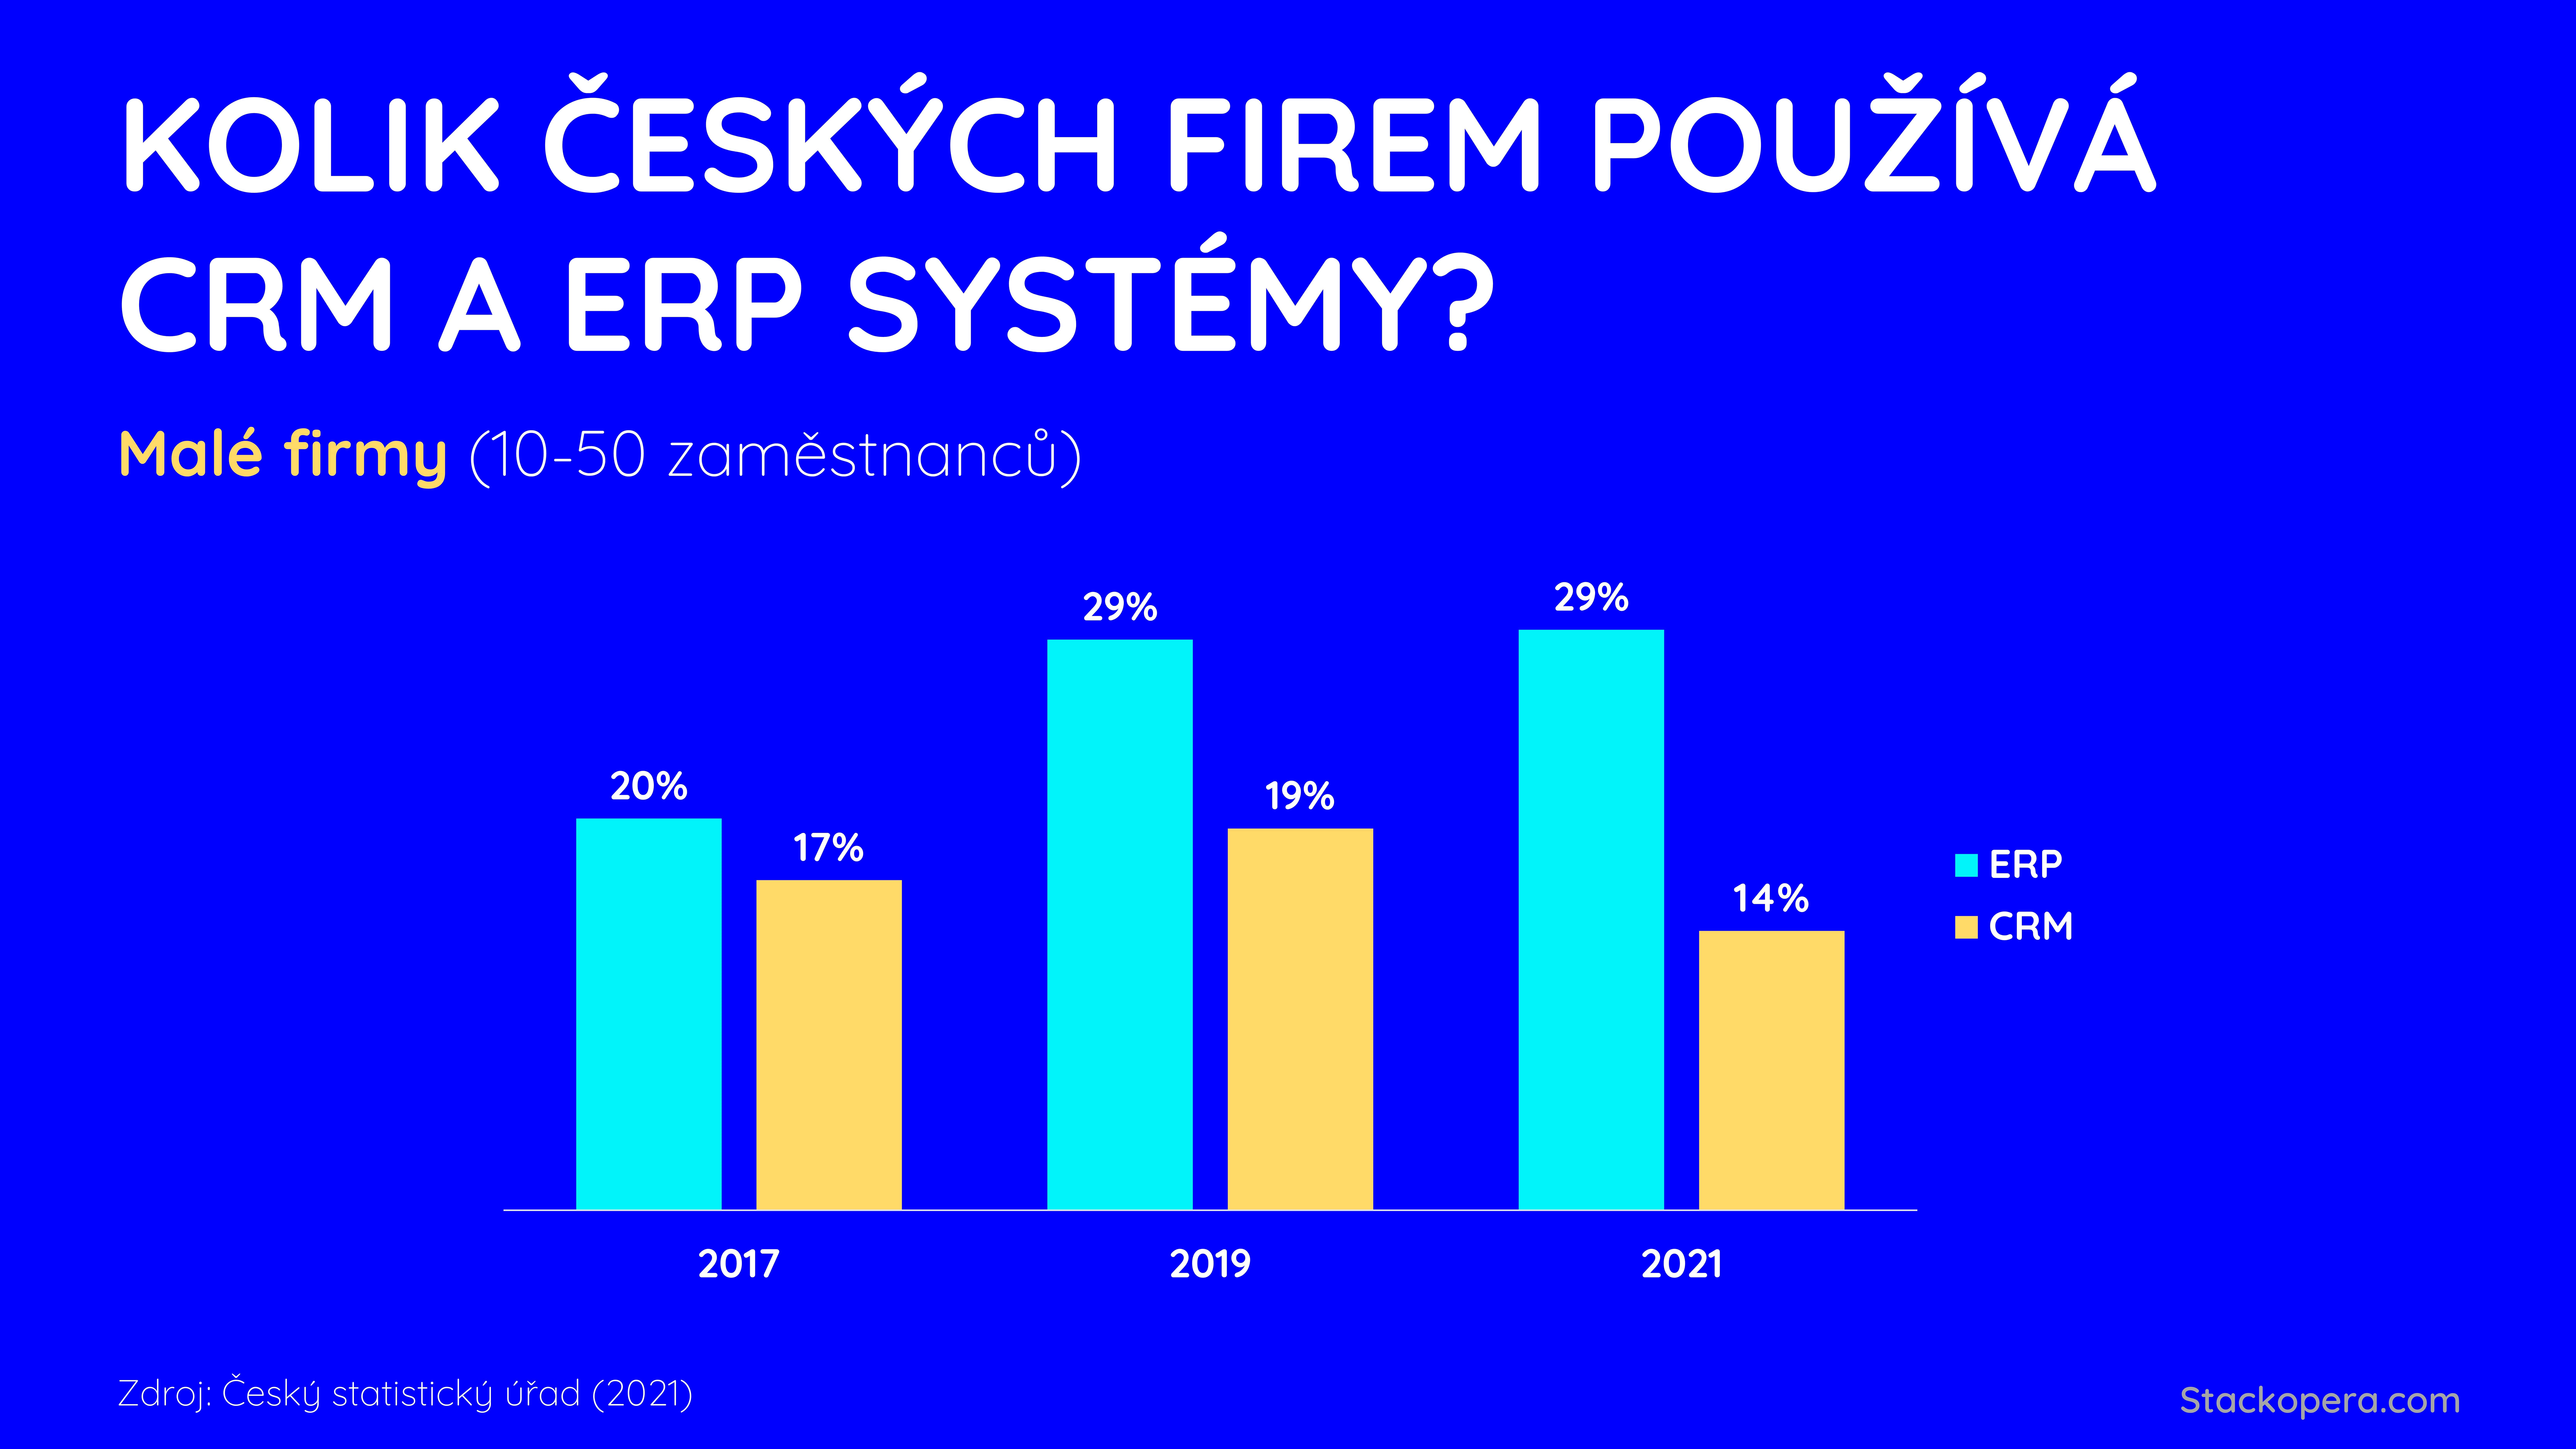 ERP systemy CRM systemy male firmy statistika rok 2022